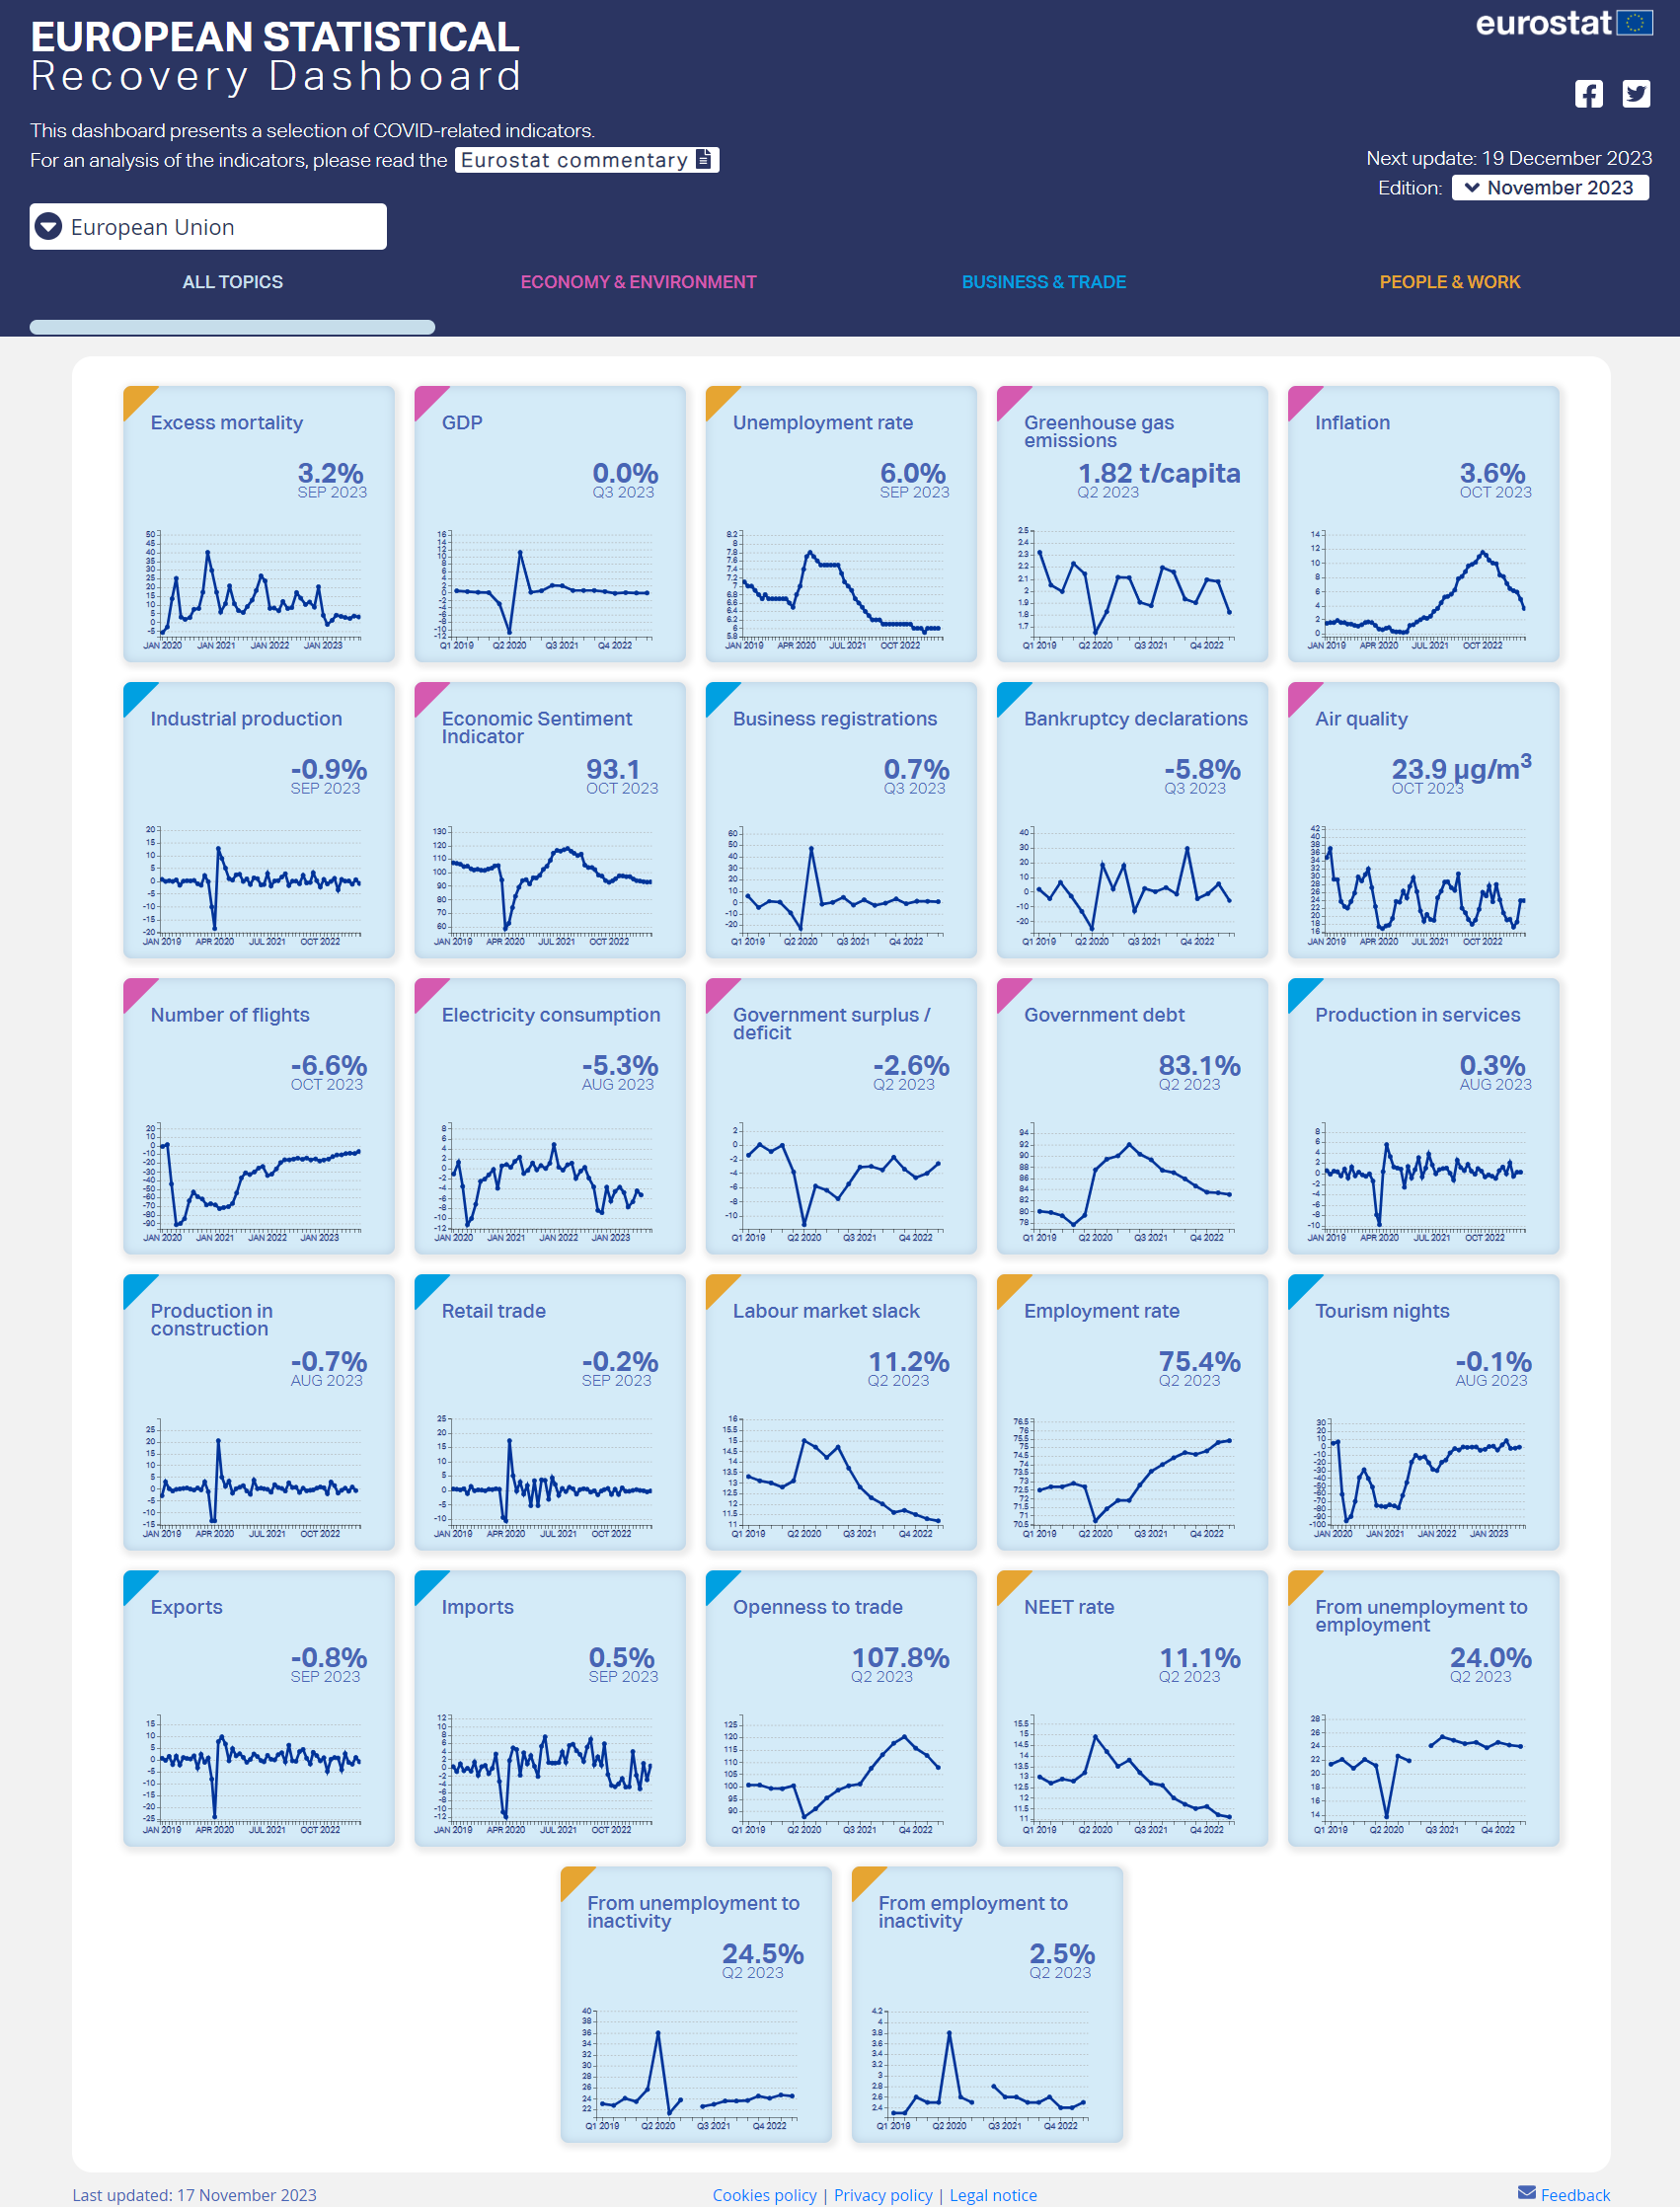 Screenshot: European Statistical Recovery Dashboard